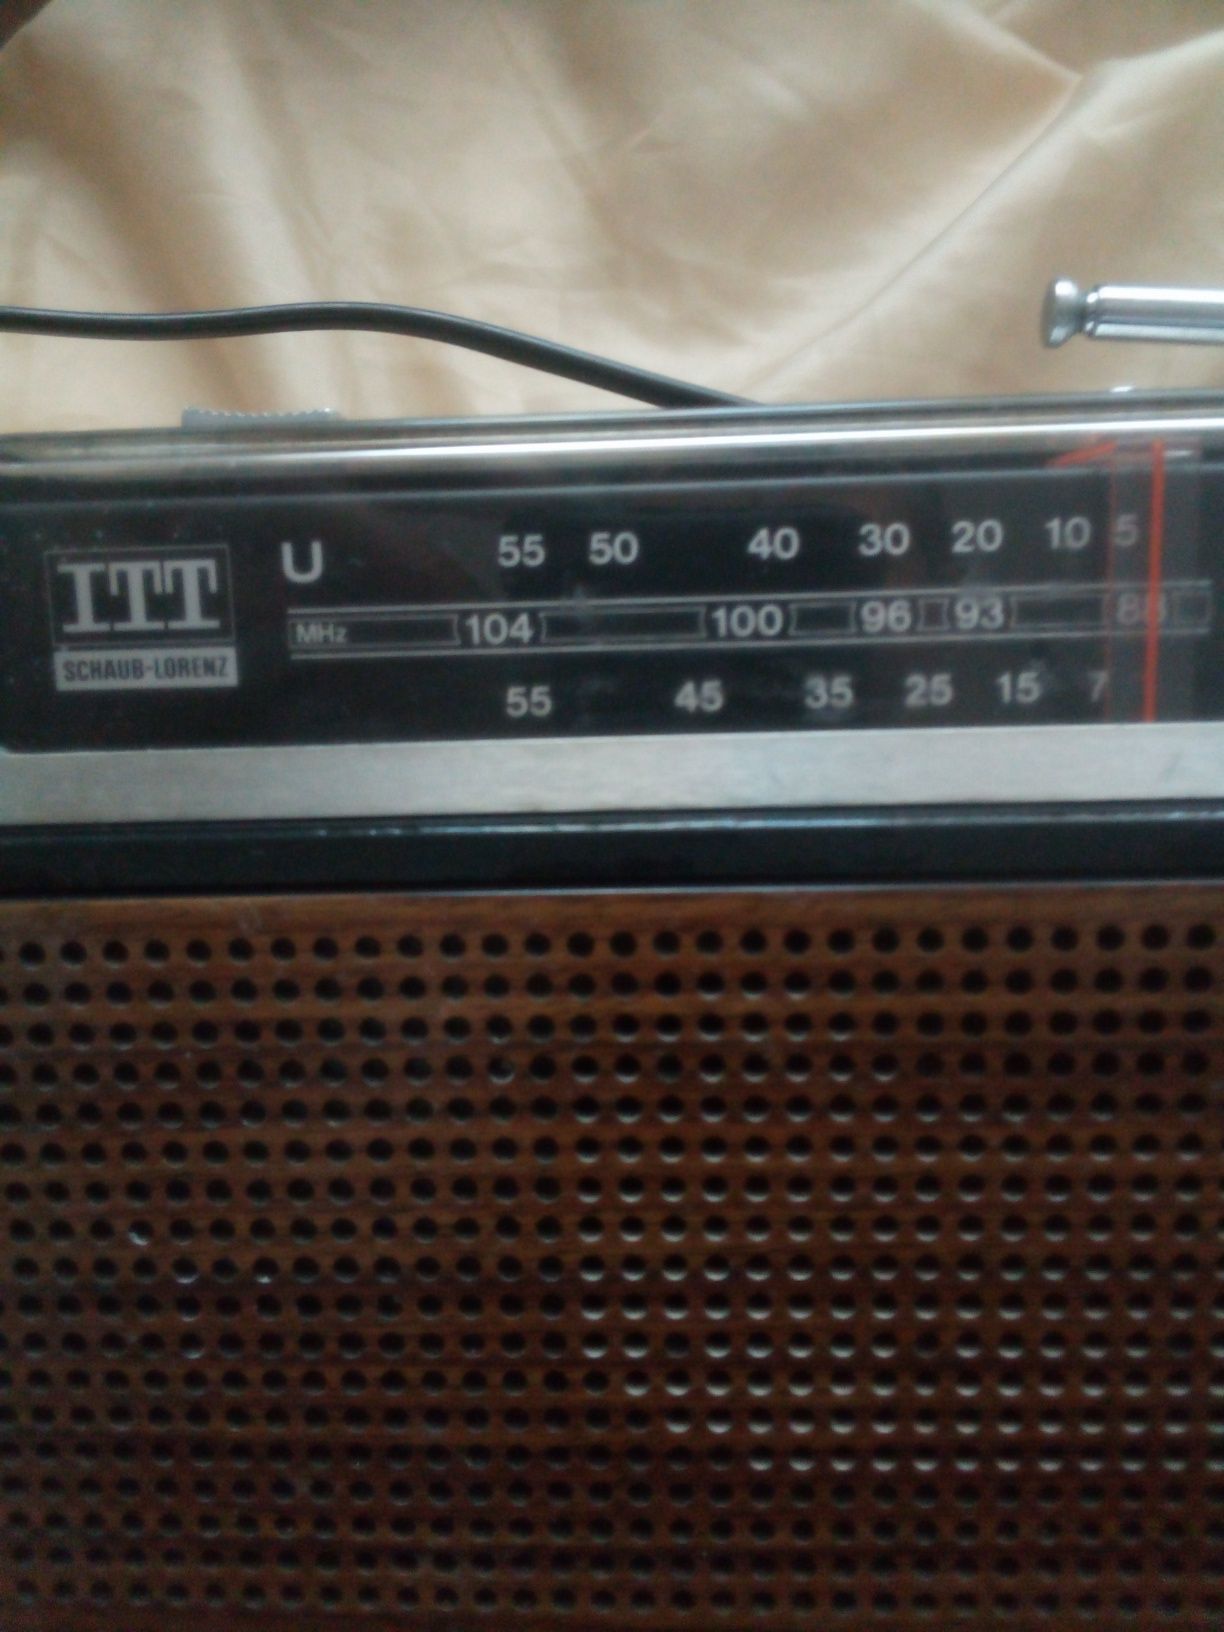 Radio vitange ITT schaub- lorenz, original